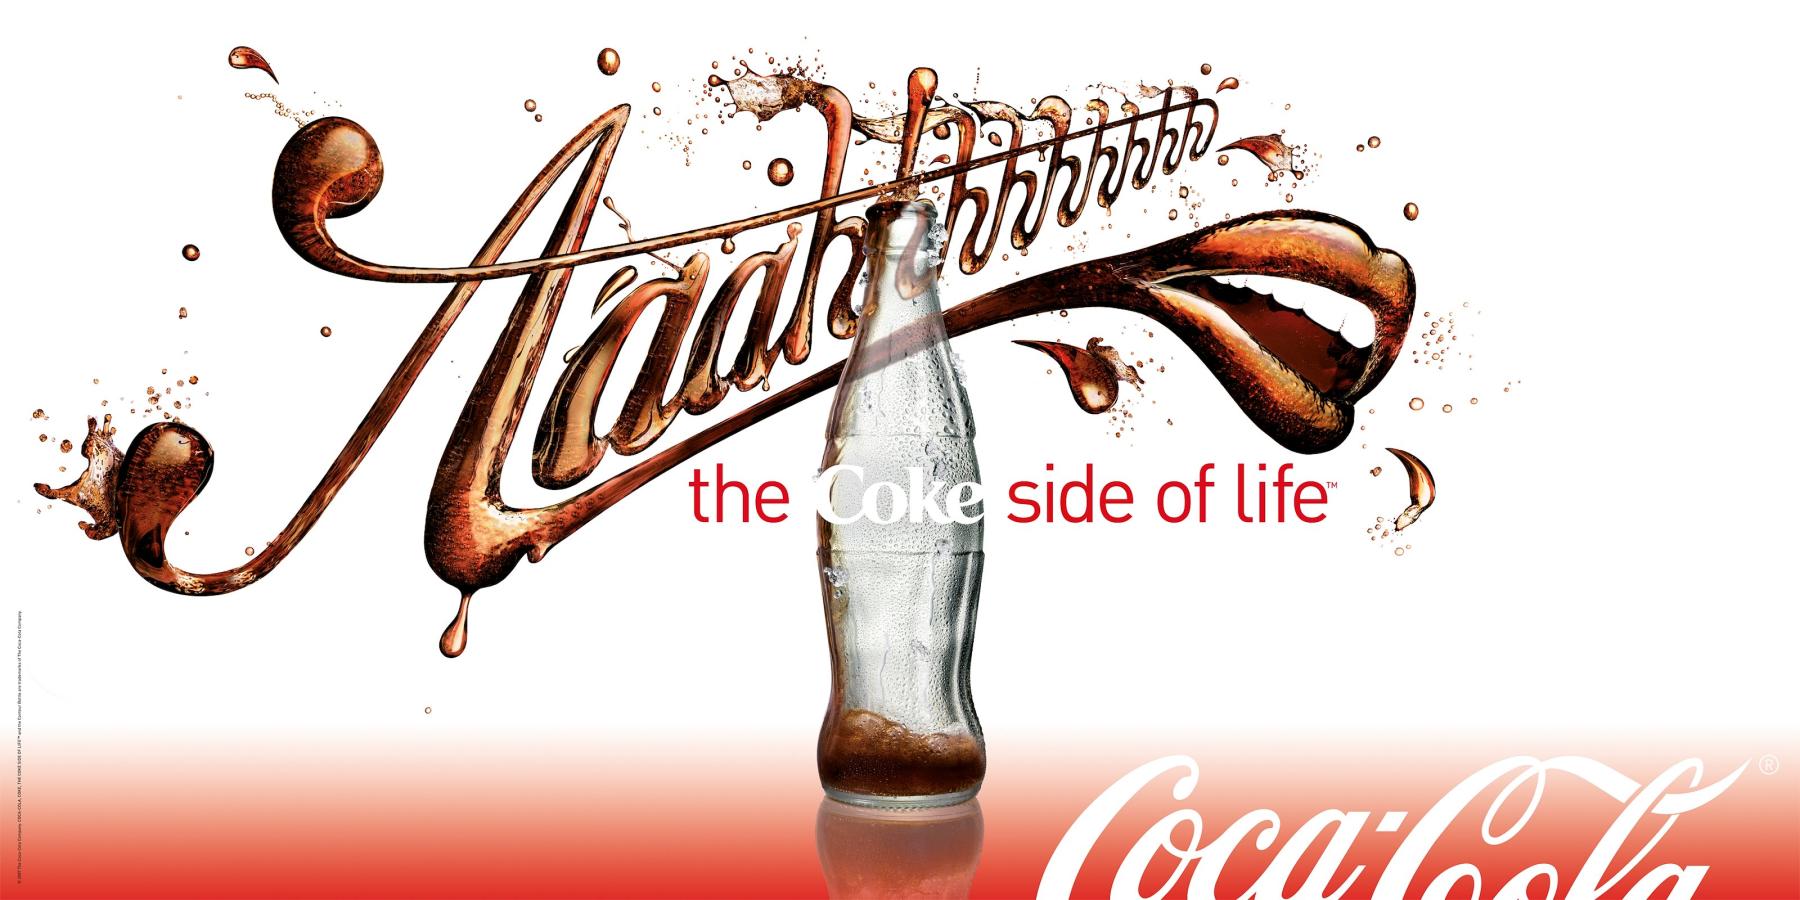 Coca-Cola – The Coke side of life